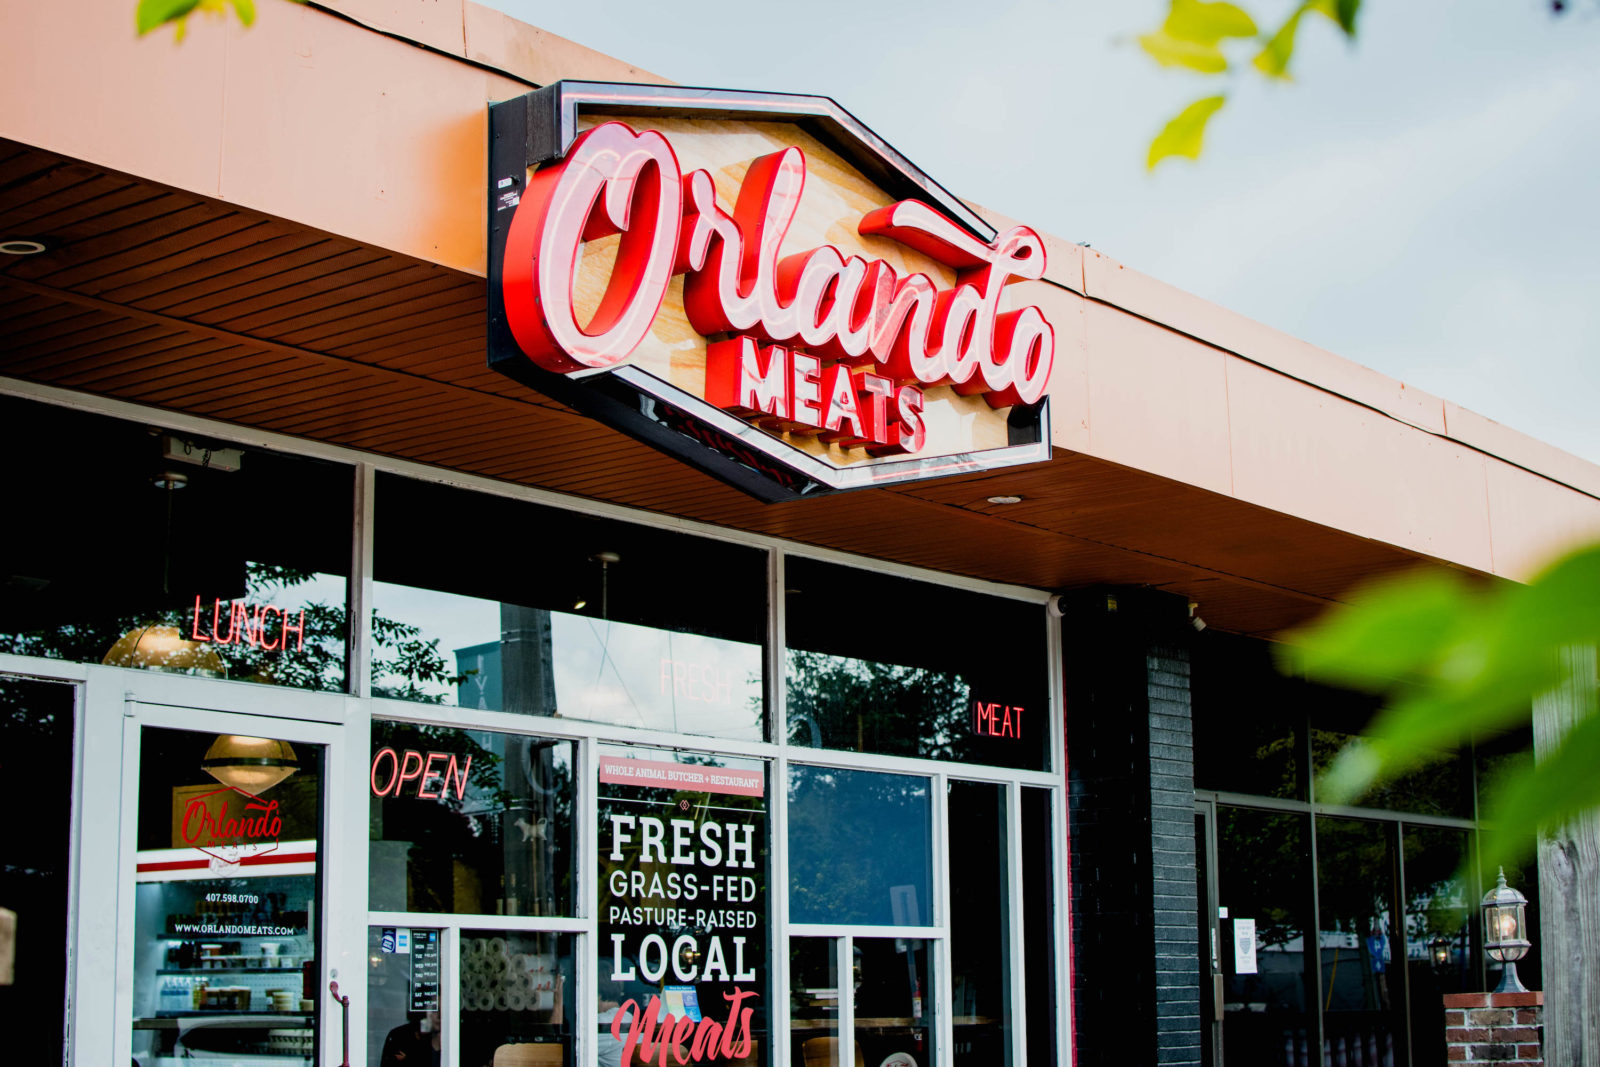 Orlando Meats located on Virginia Drive.